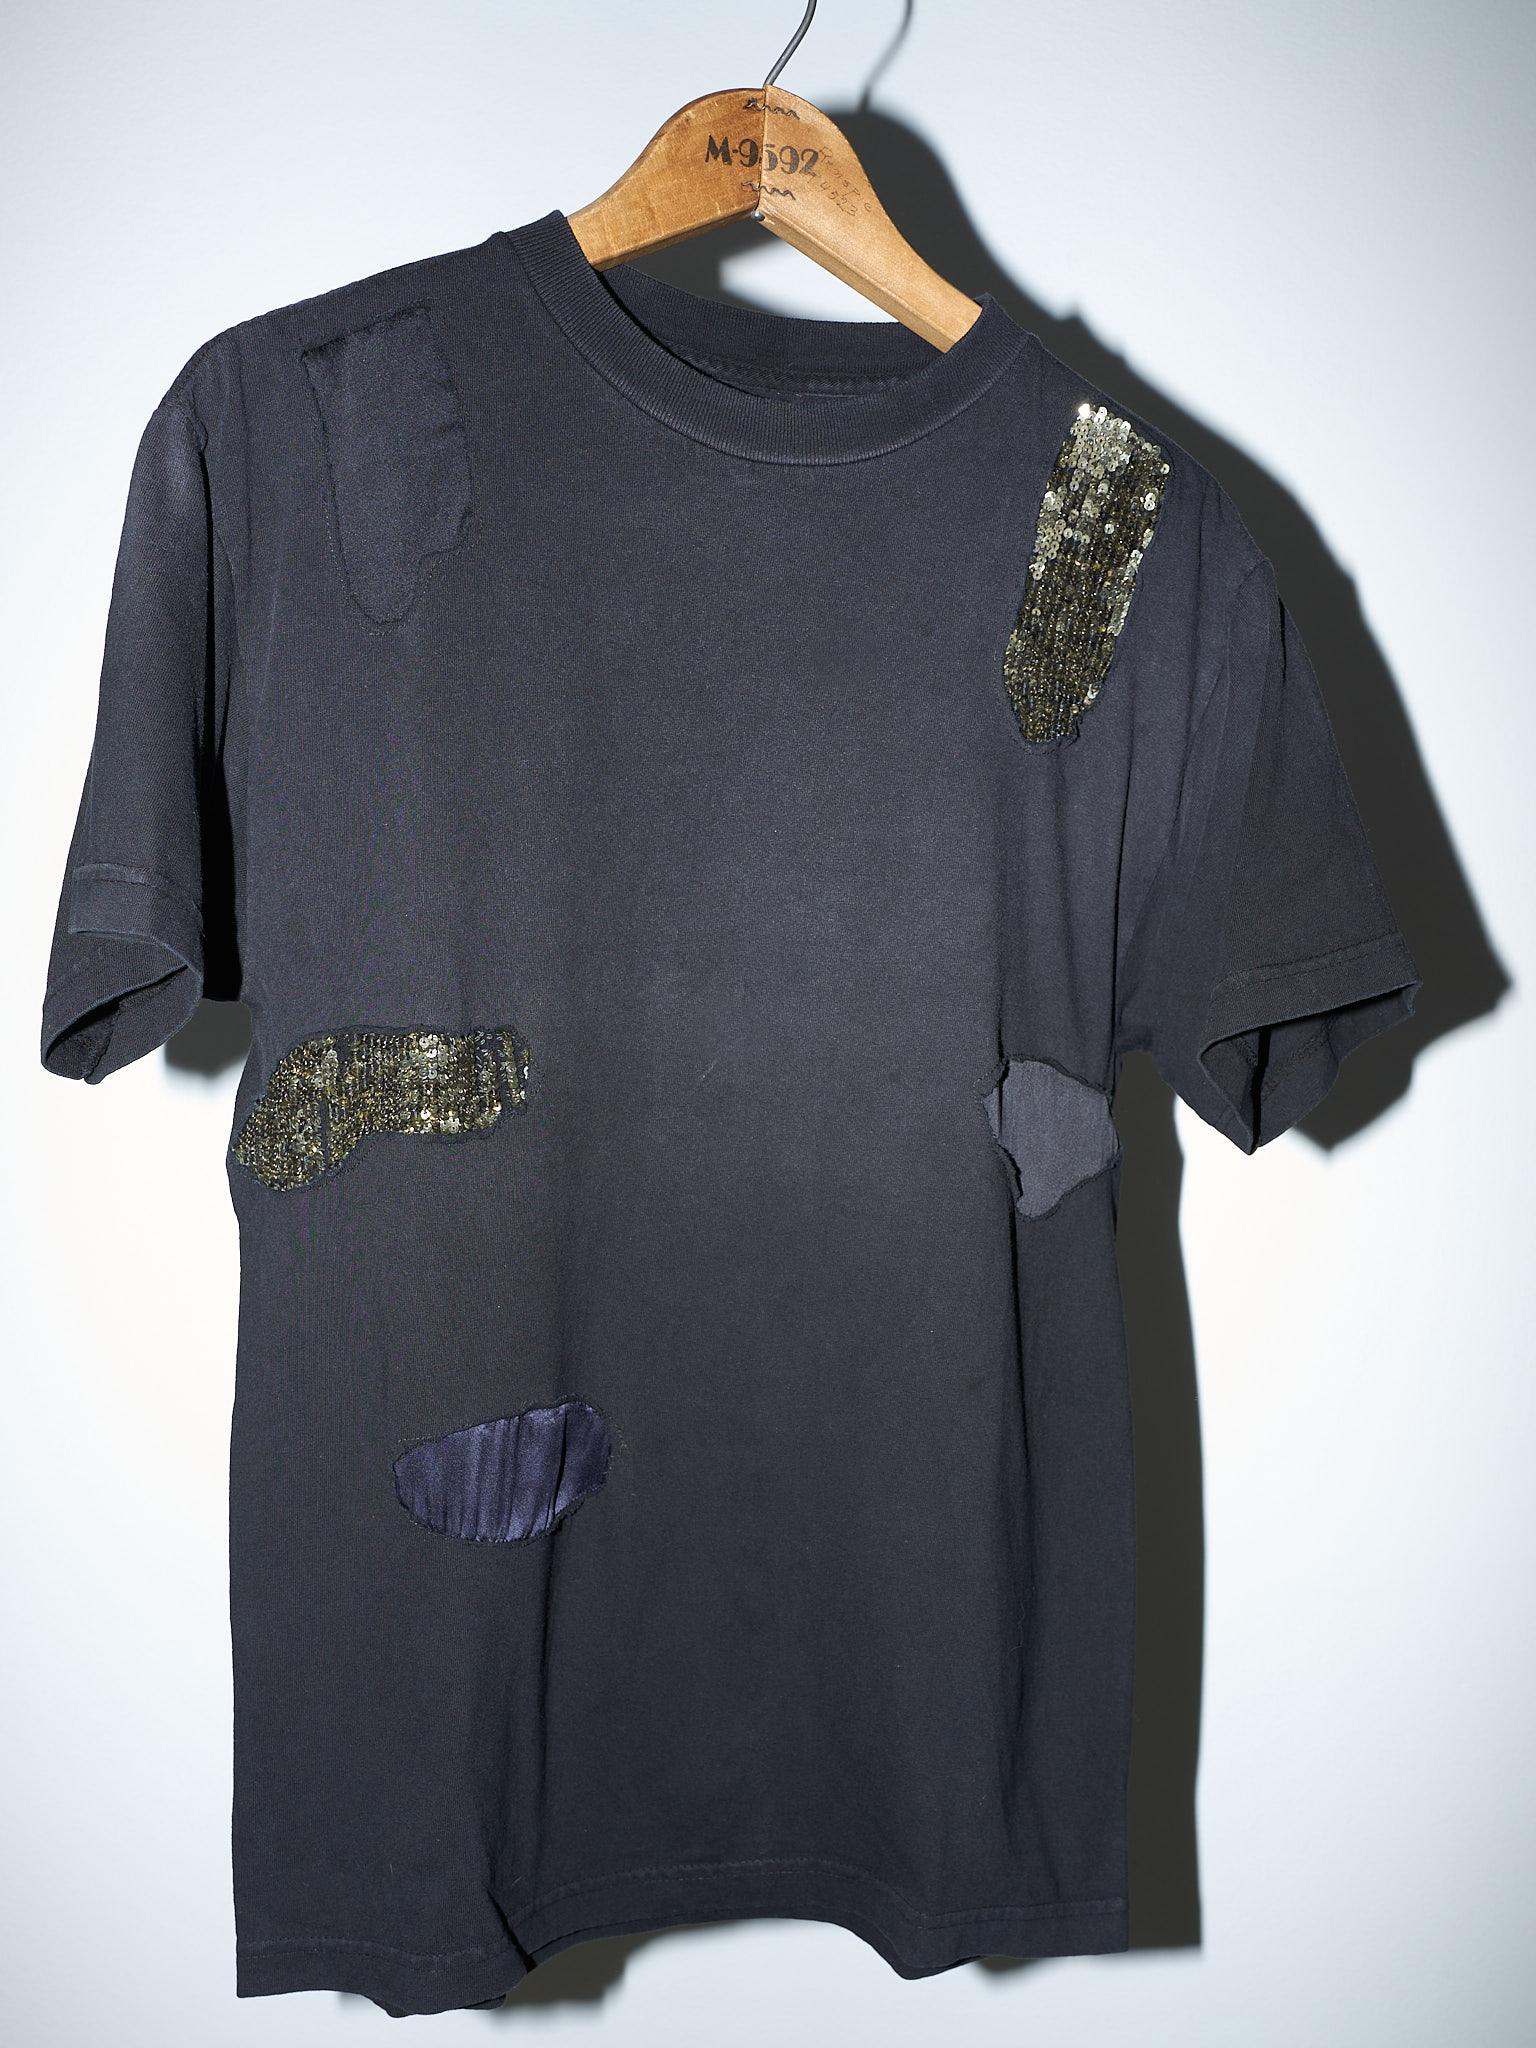 J Dauphin Black T-Shirt Embellished  Patch Work Sequin Silk Body Cotton  6